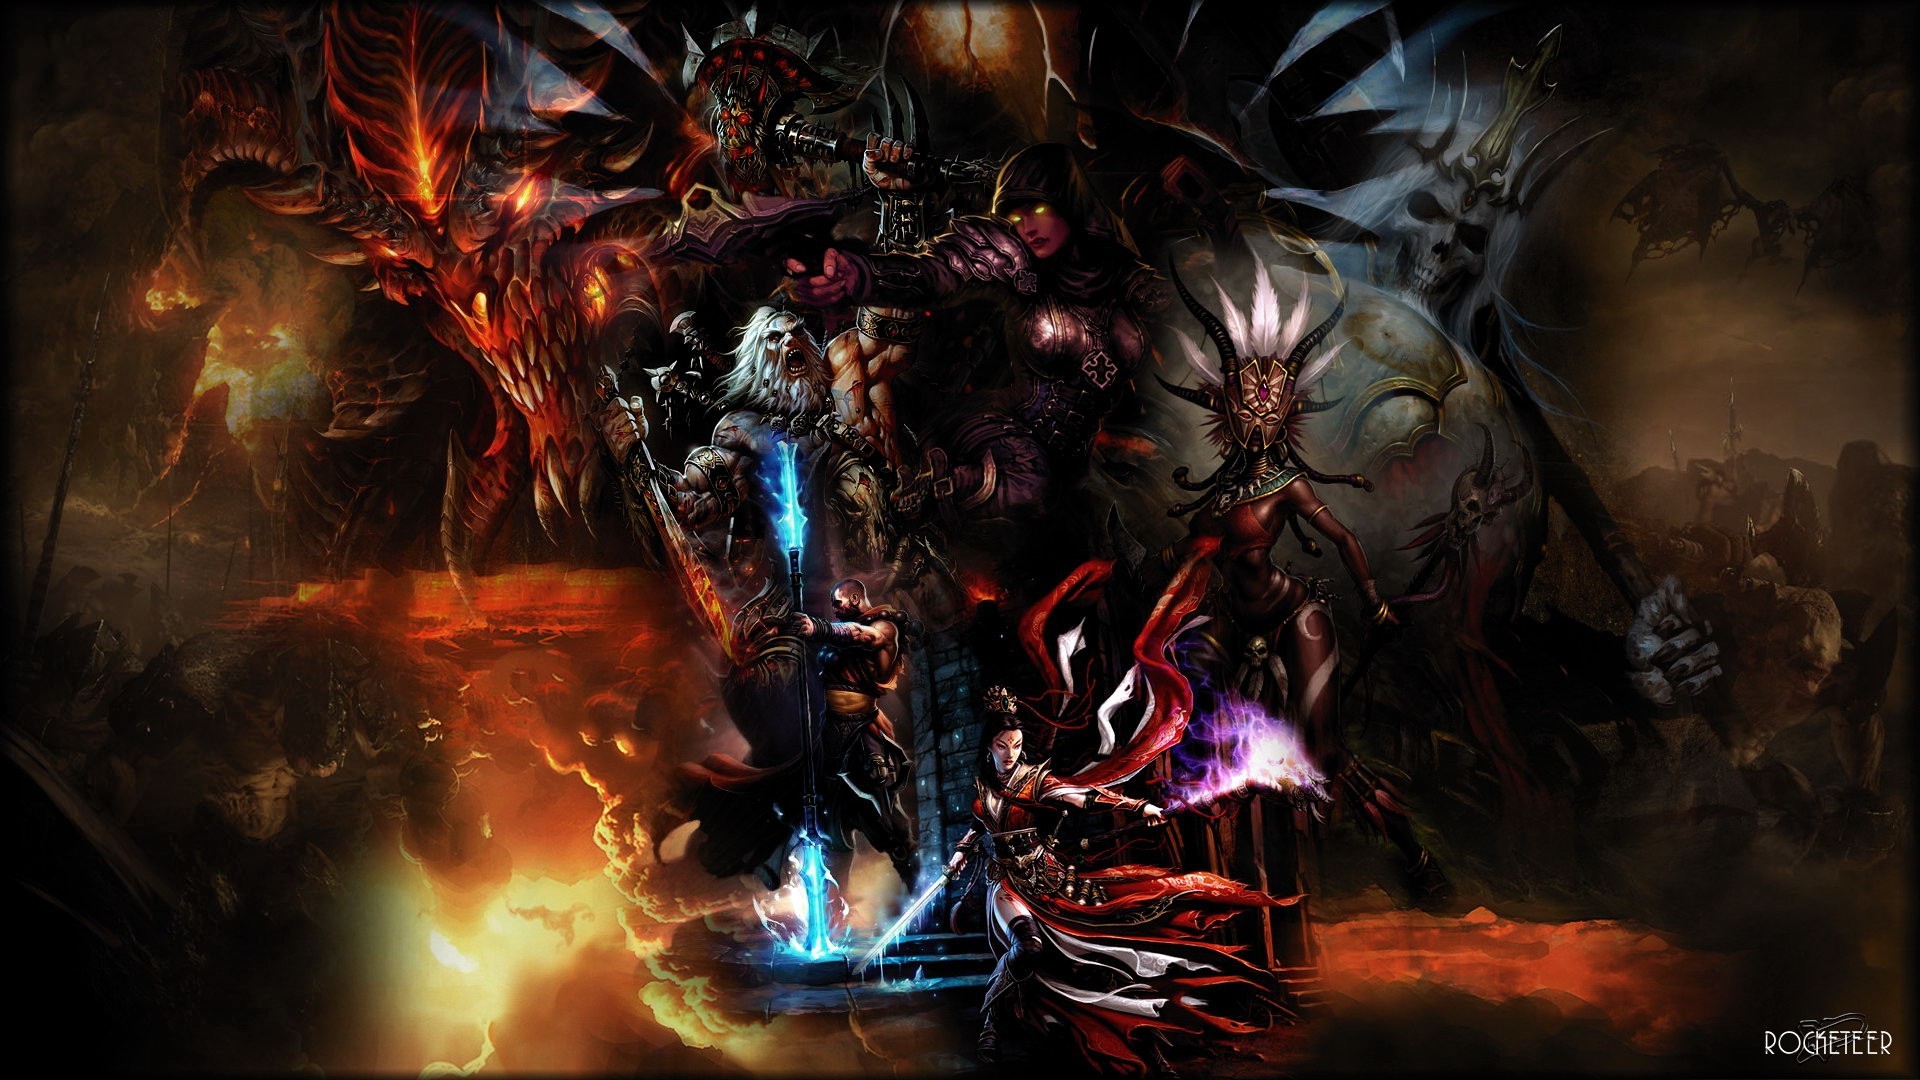 General 1920x1080 Diablo III video games Blizzard Entertainment fantasy art PC gaming